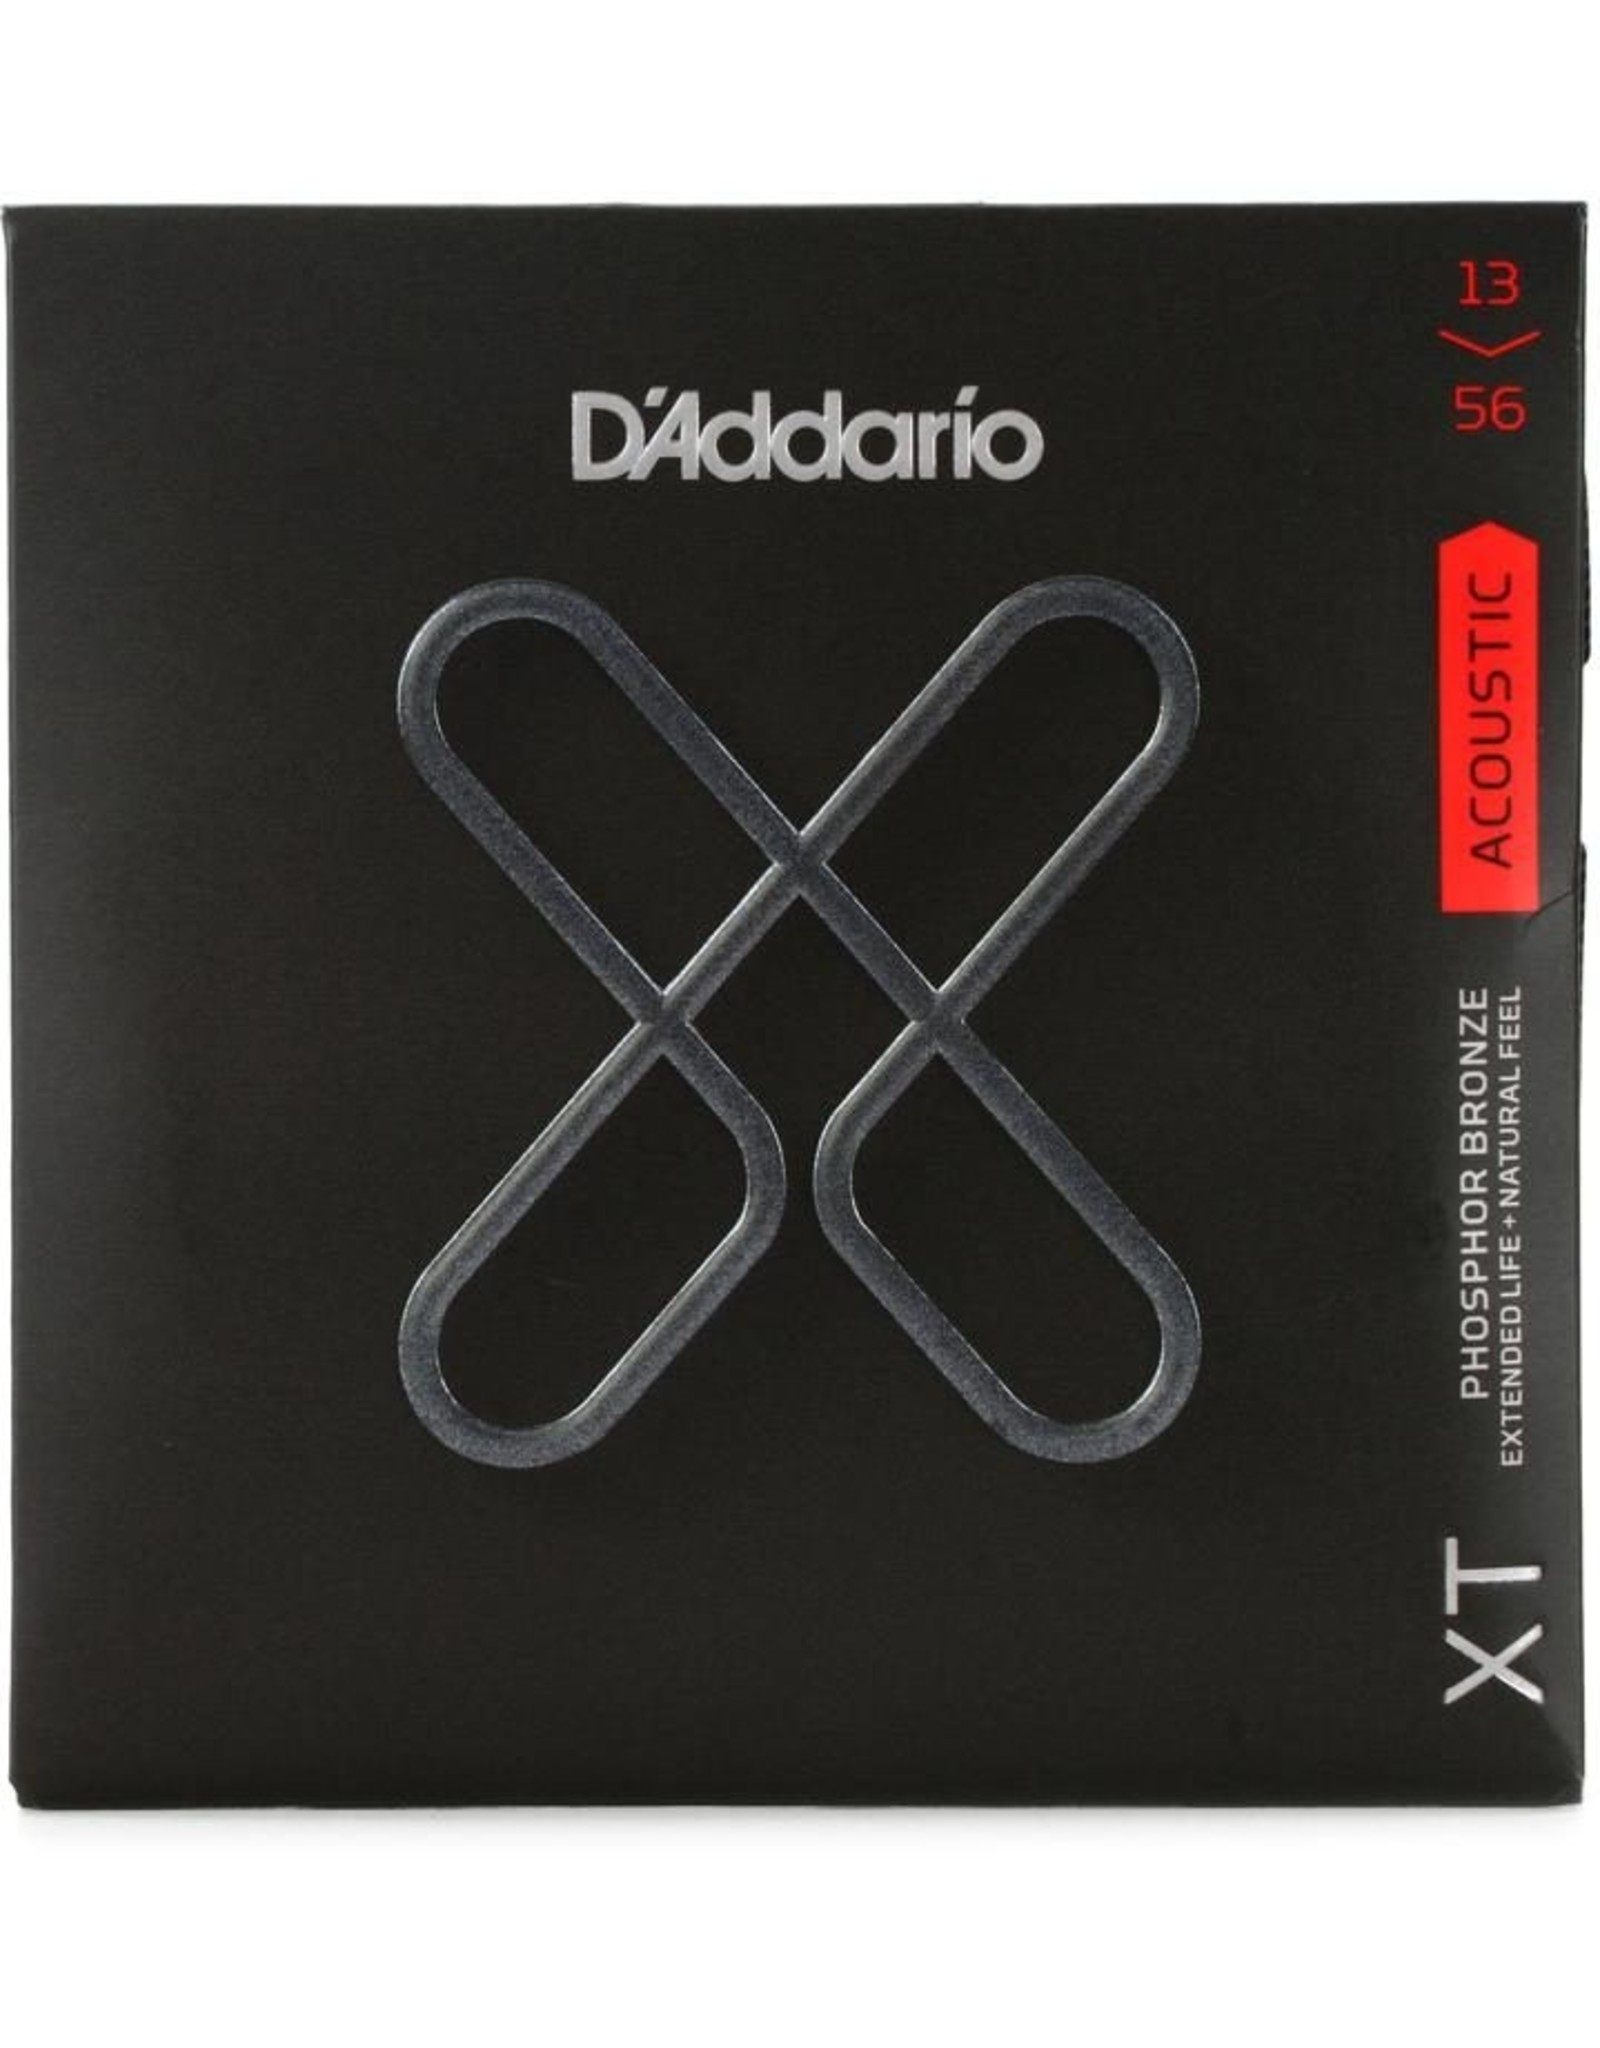 D'Addario D'Addario XT Acoustic Phosphor Bronze, Medium, 13-56